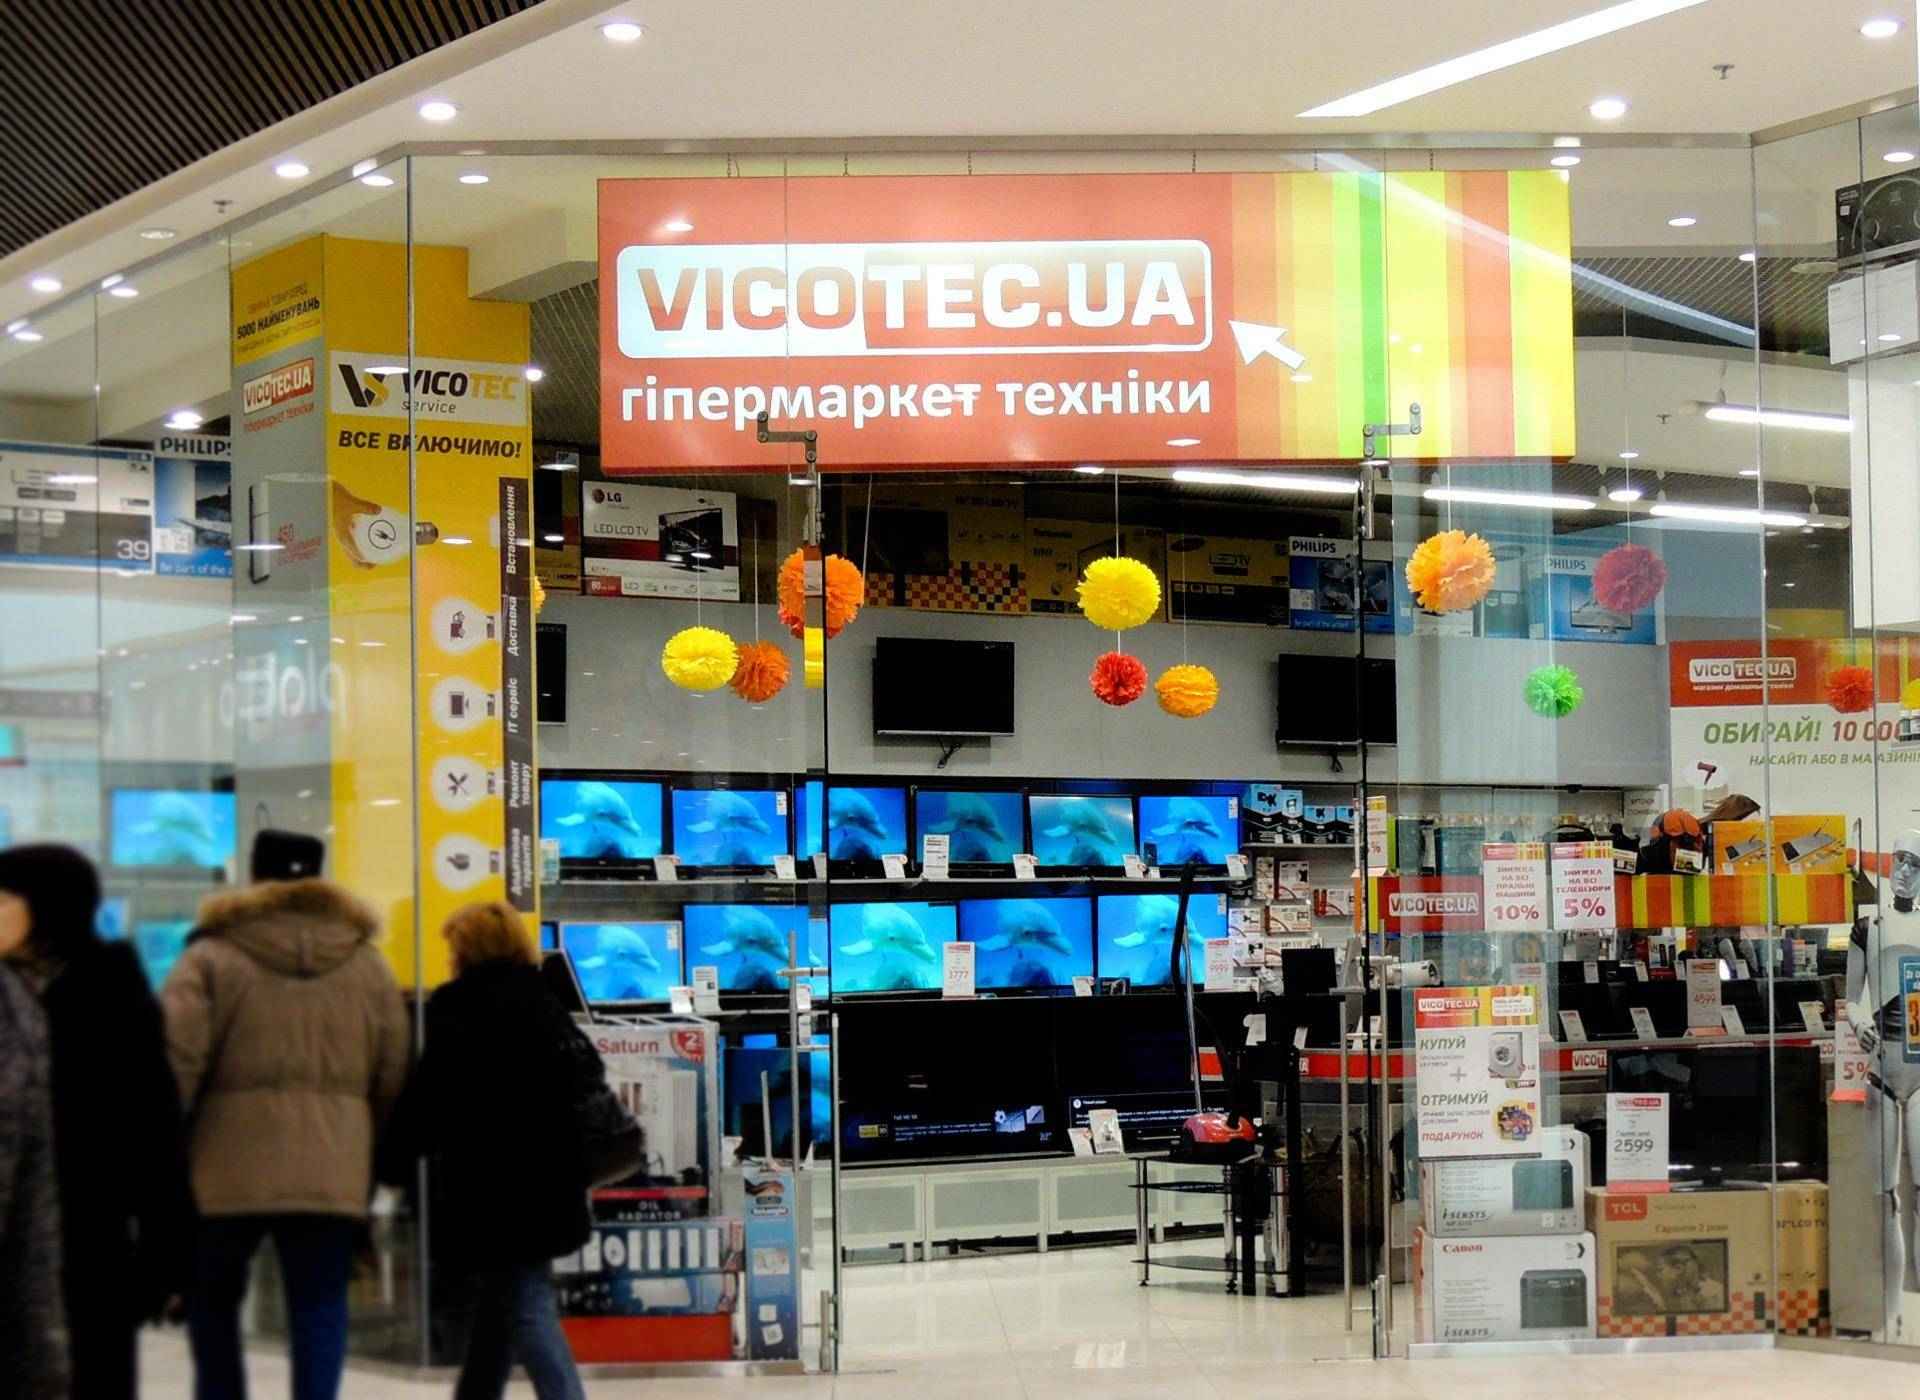 брендбук гипермаркета электронной техники Vicotec